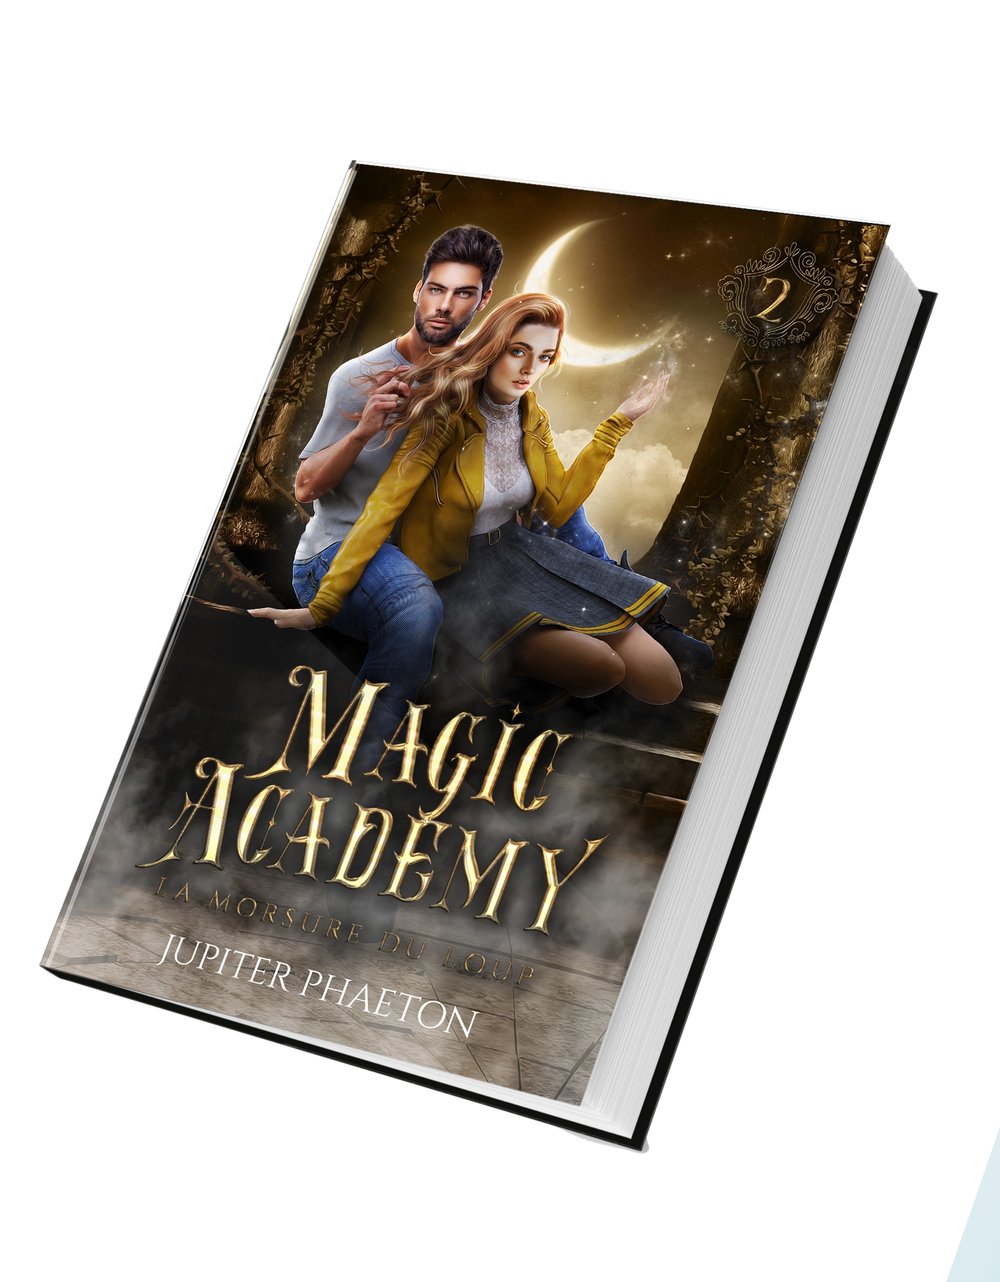 Magic Academy tome 2